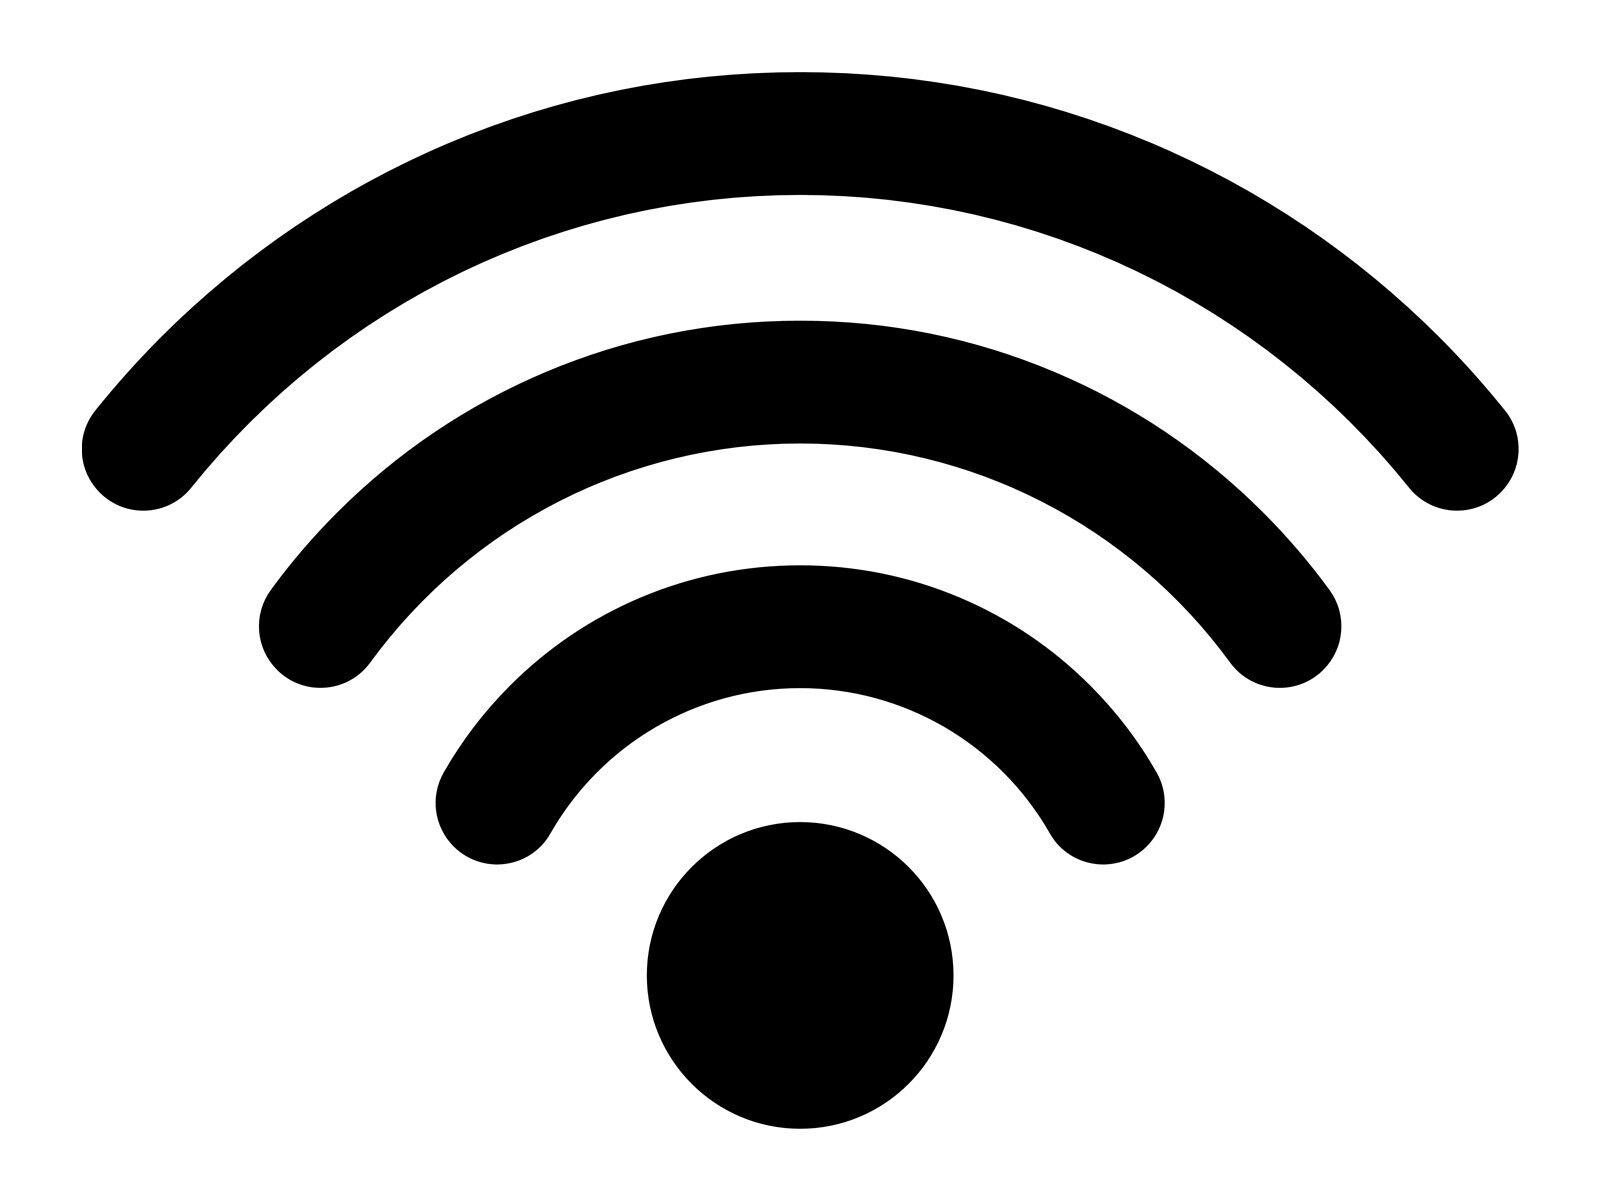 A wifi symbol